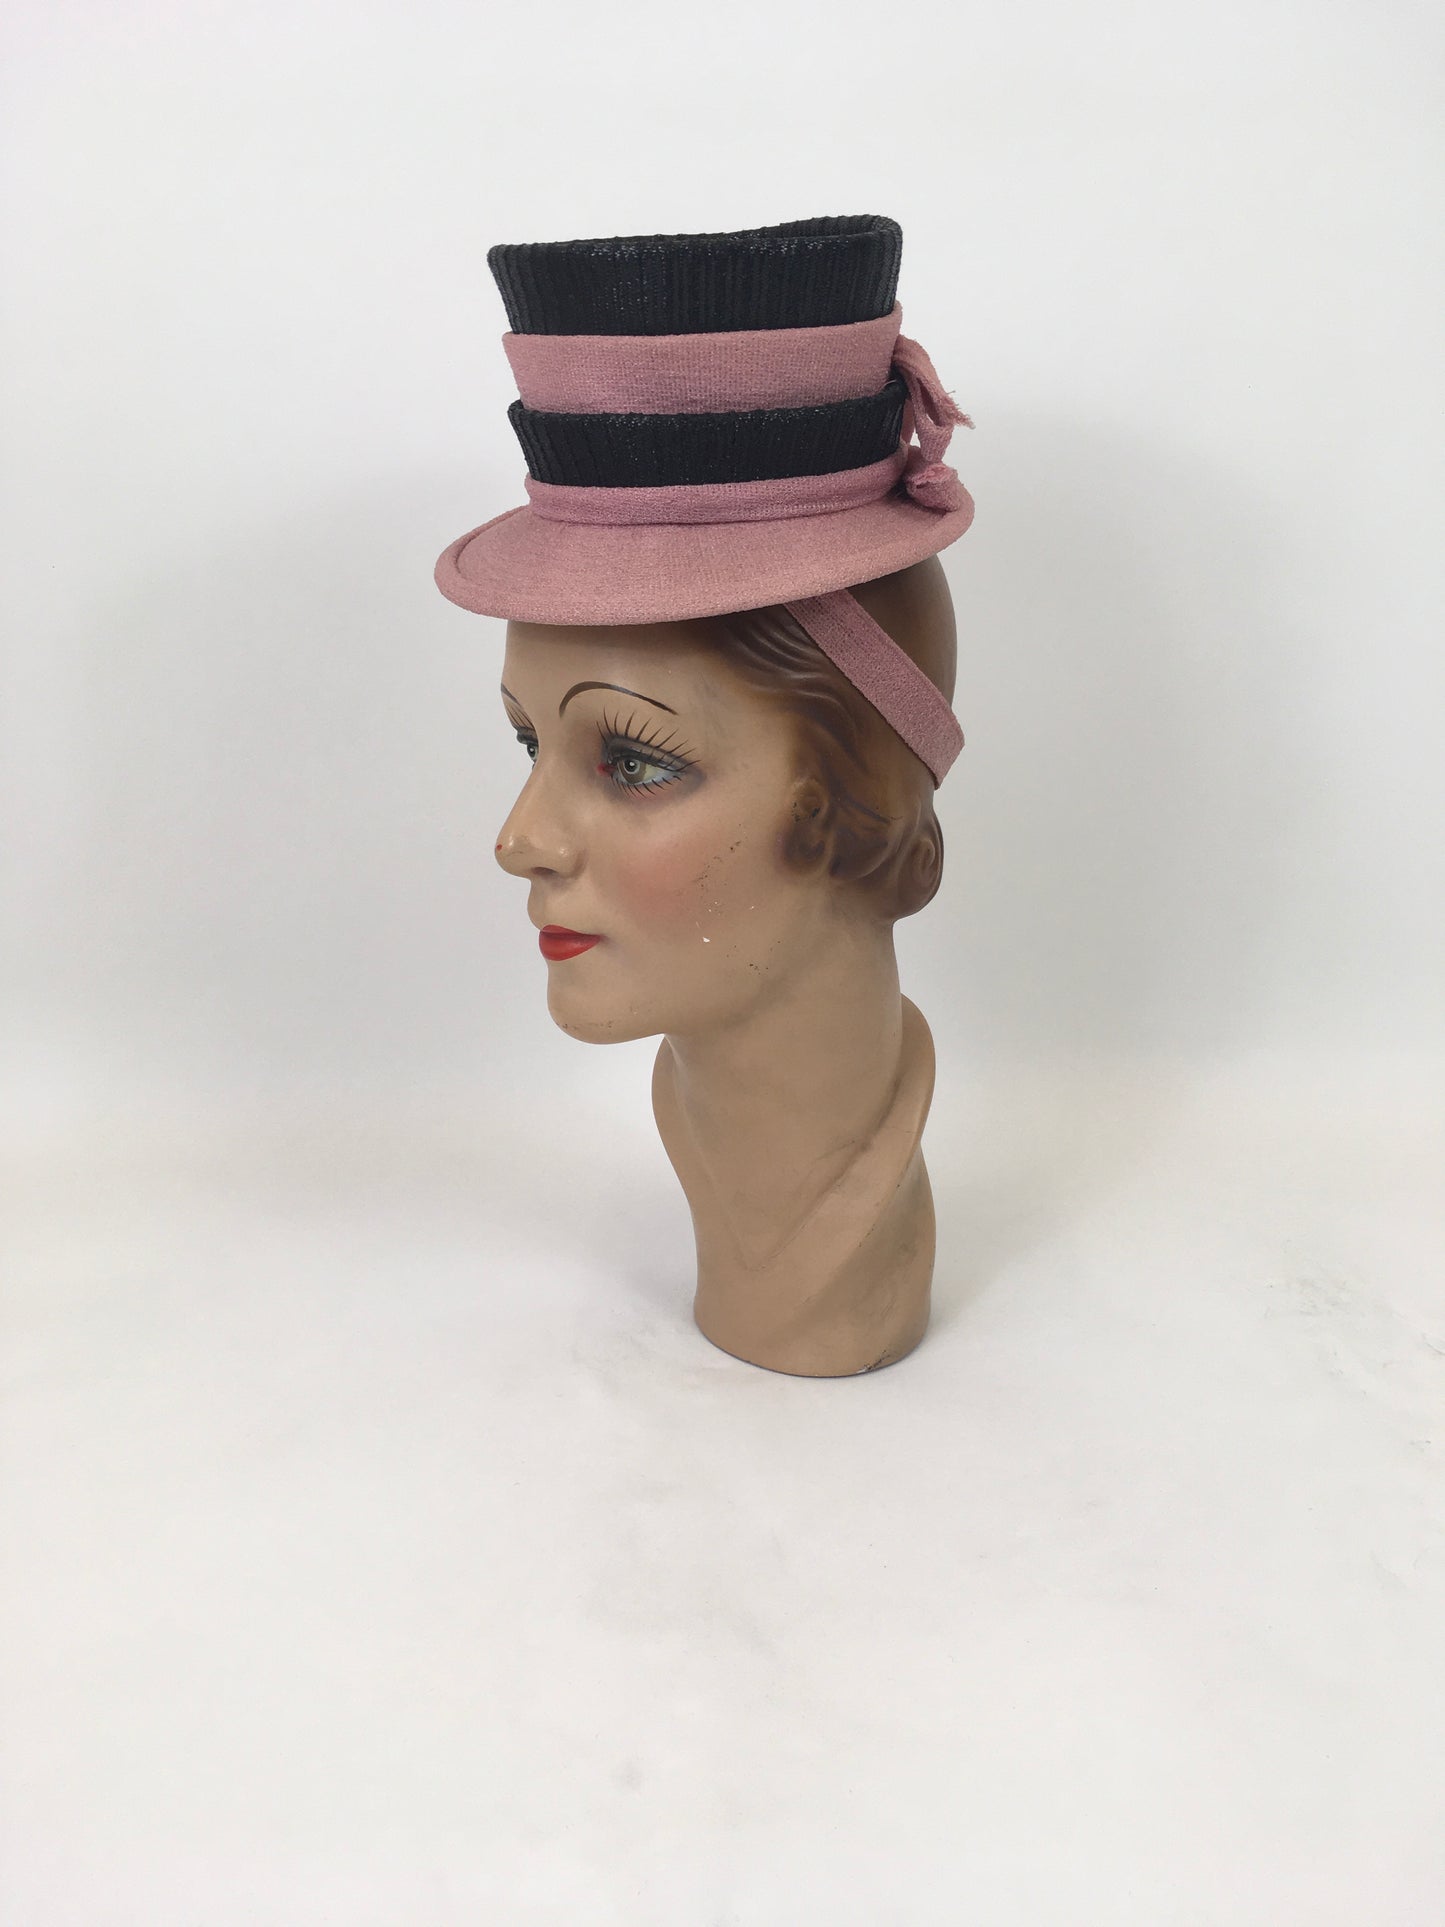 Original 1940's SENSATIONAL American Toy Topper Tilt Hat - In Black with Powered Rose